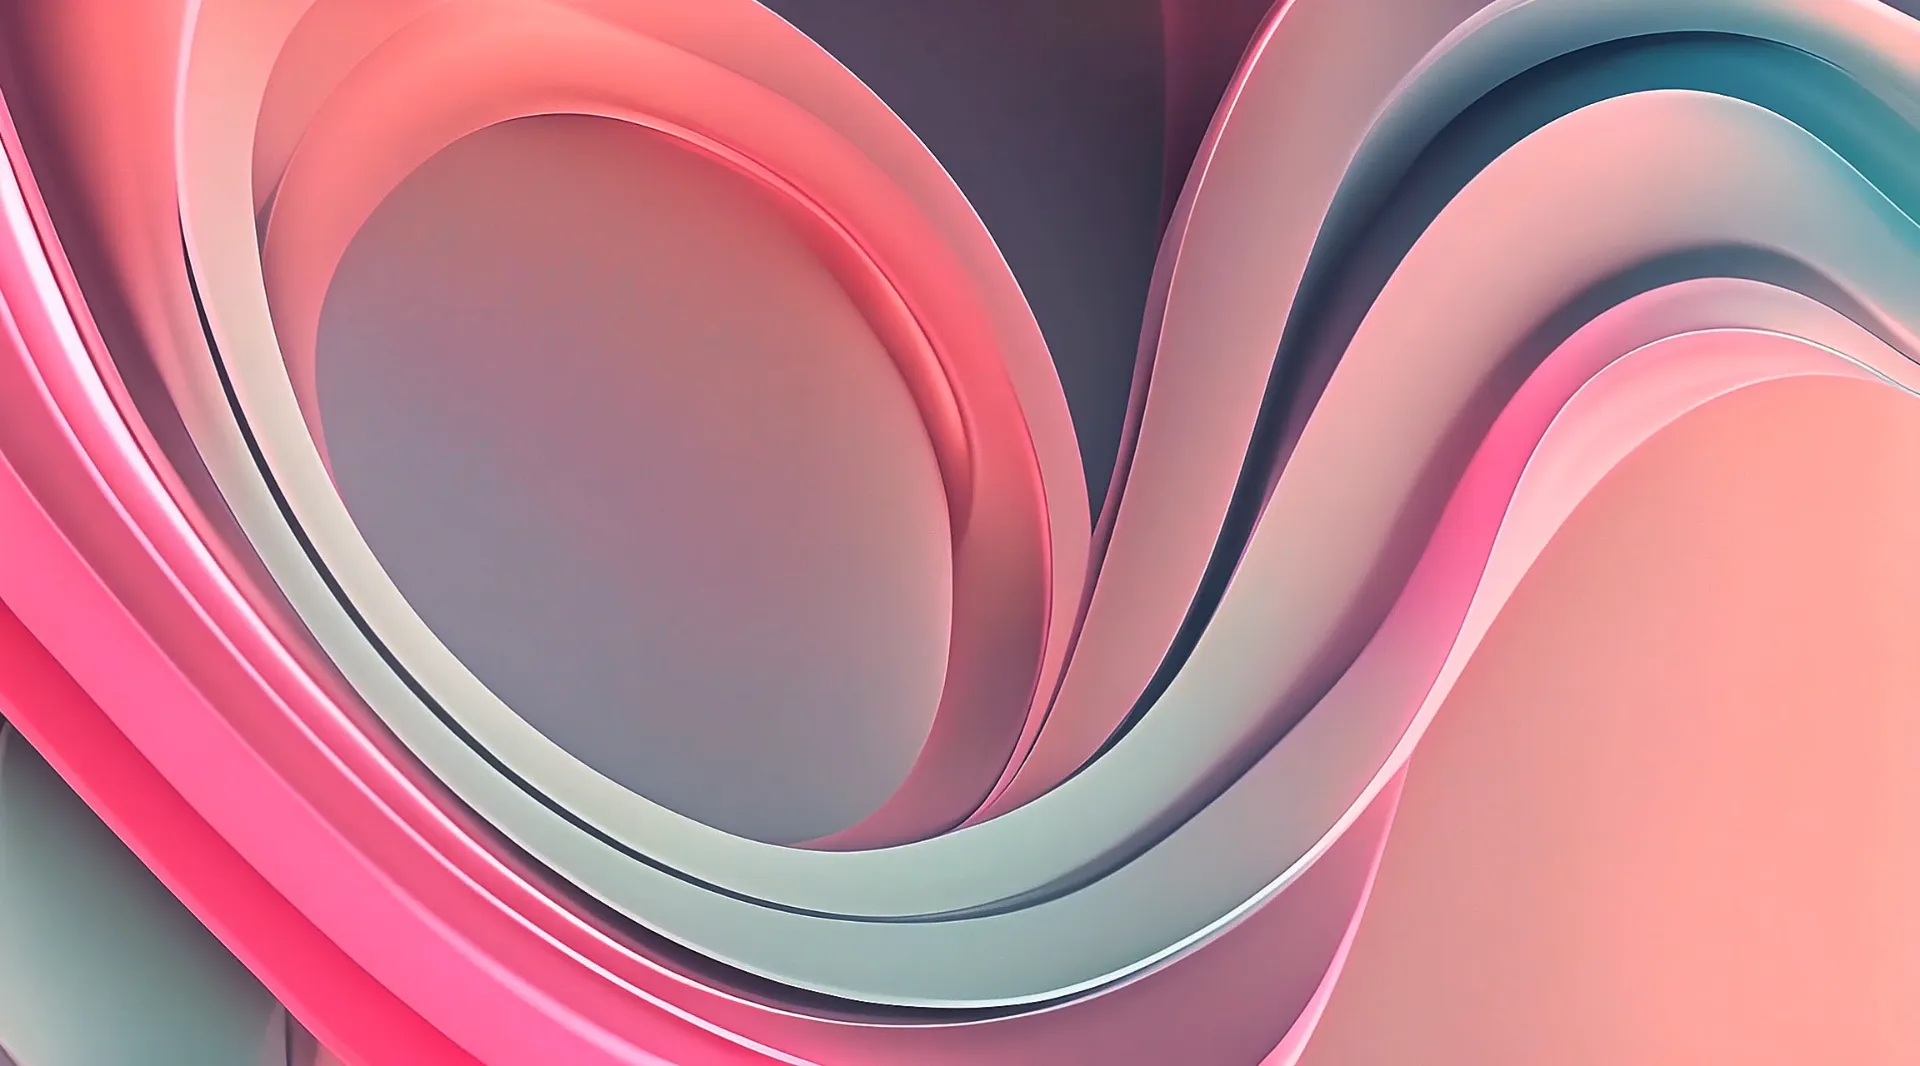 Pastel Swirls and Fluid Shapes Elegant Backdrop Loop